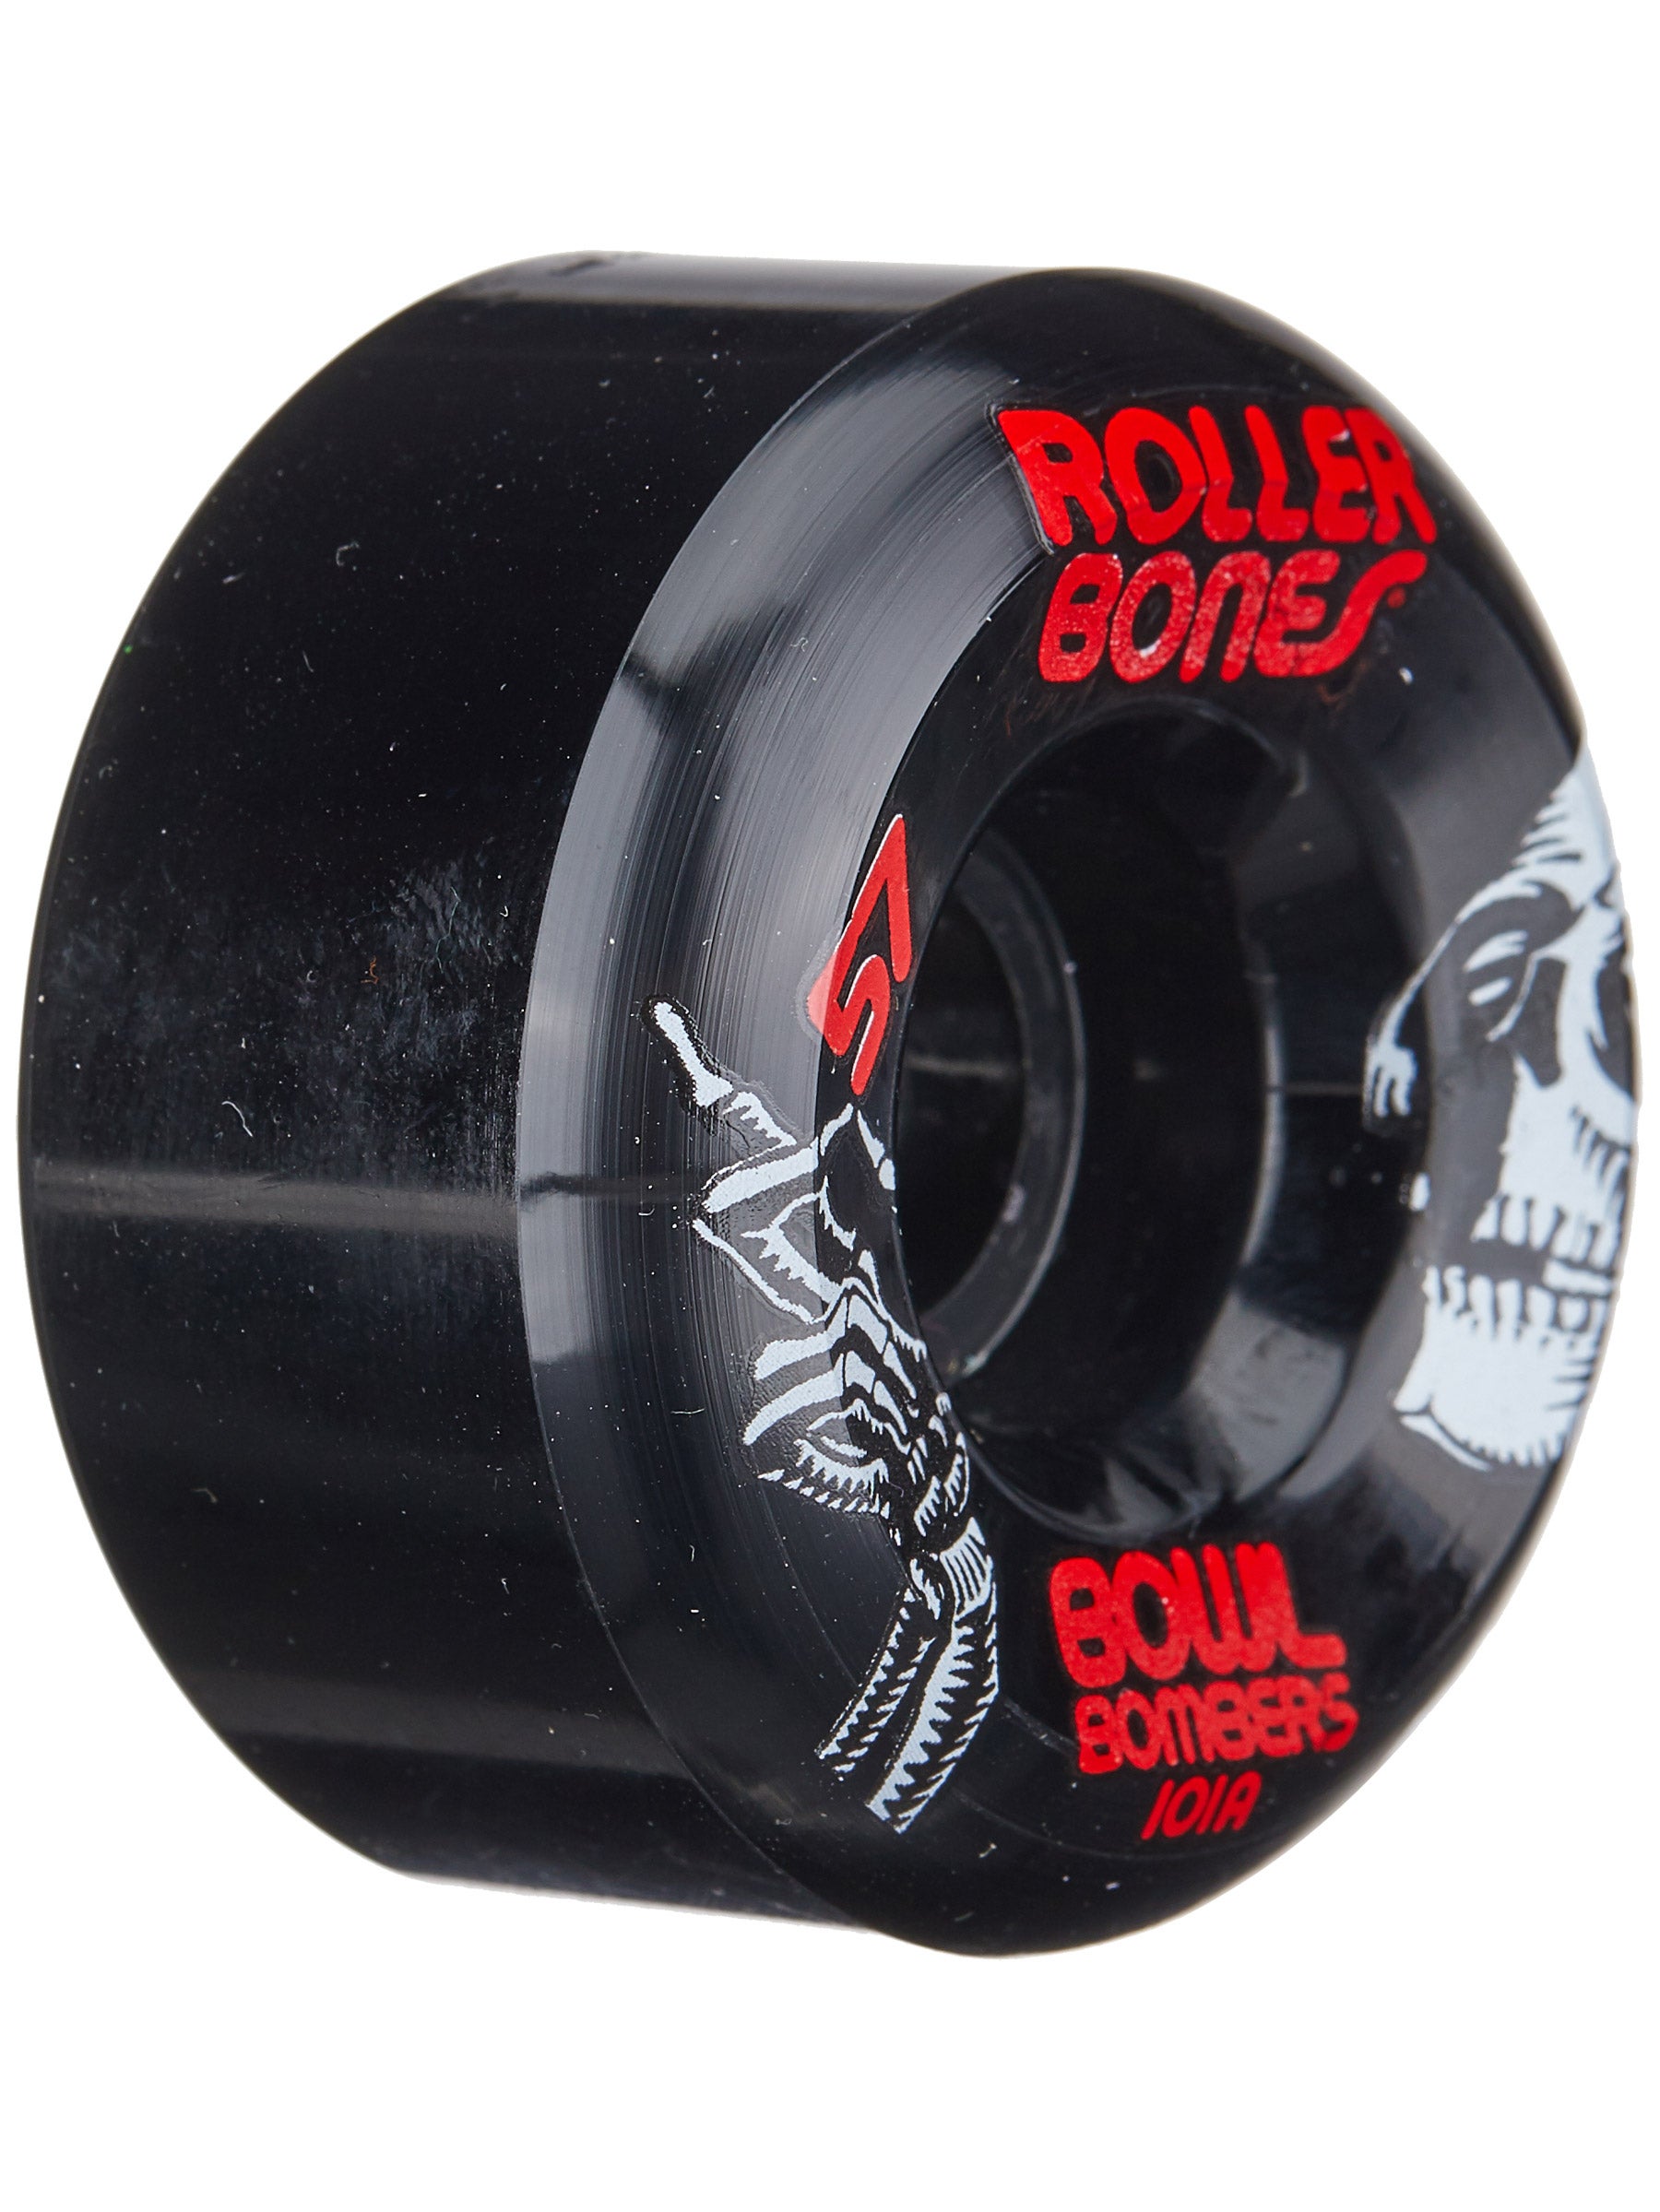 Details about   Rollerbones Bowl Bombers 101a Quadskate/Rollerskate Wheels 62mm 